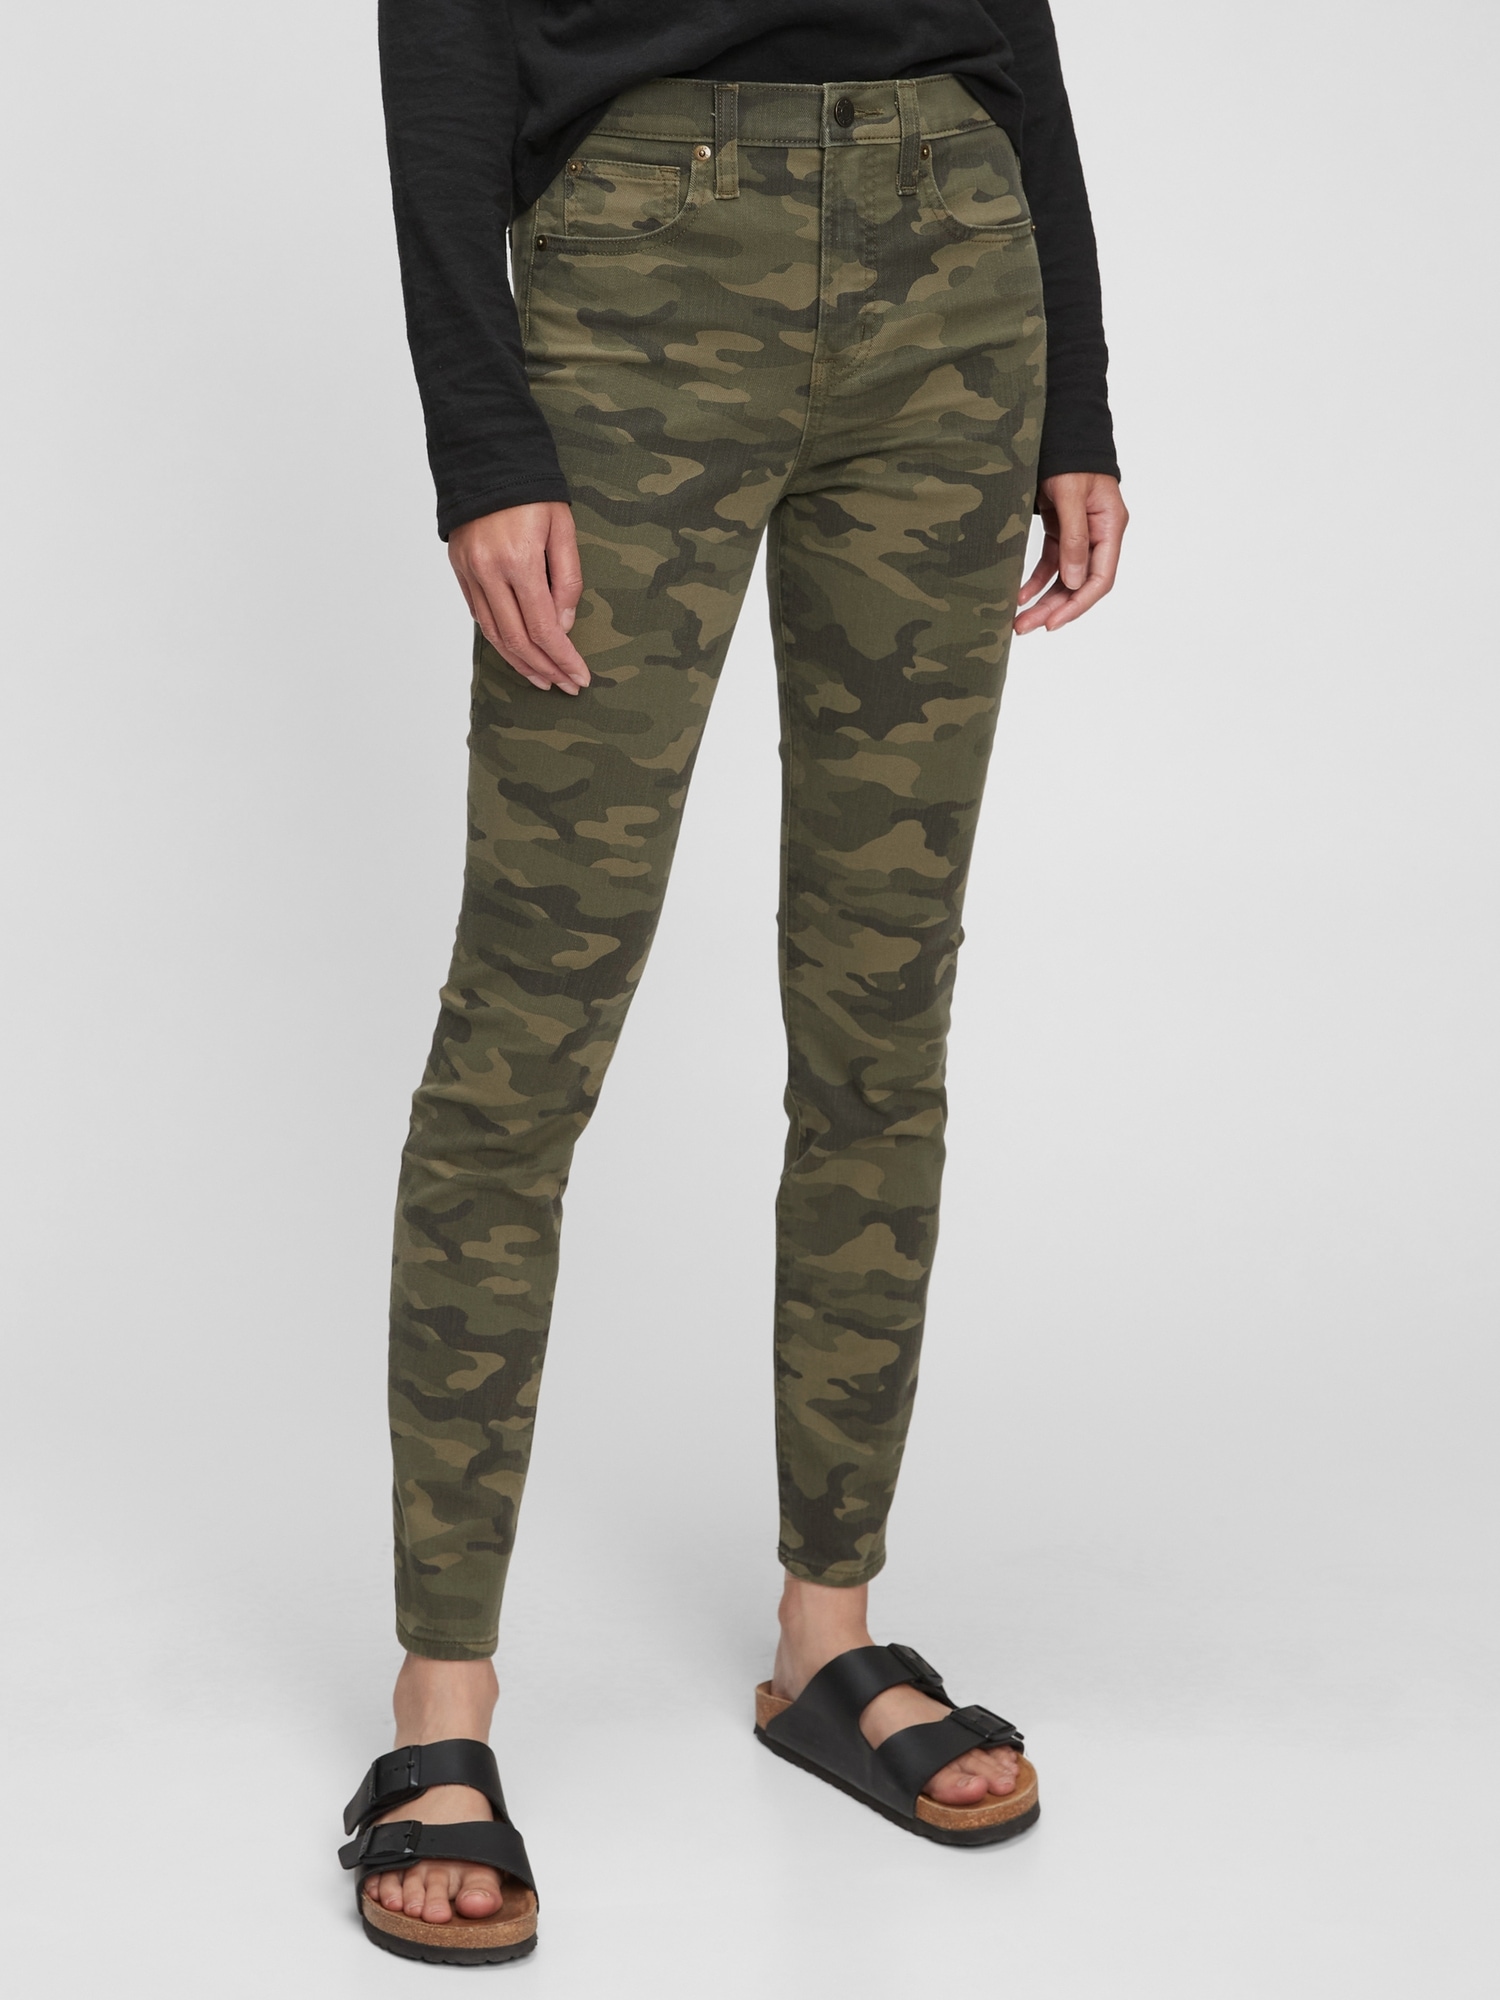 Women Girls Military Camouflage Khaki Green Camo Skinny Stetch Leggings  Pants